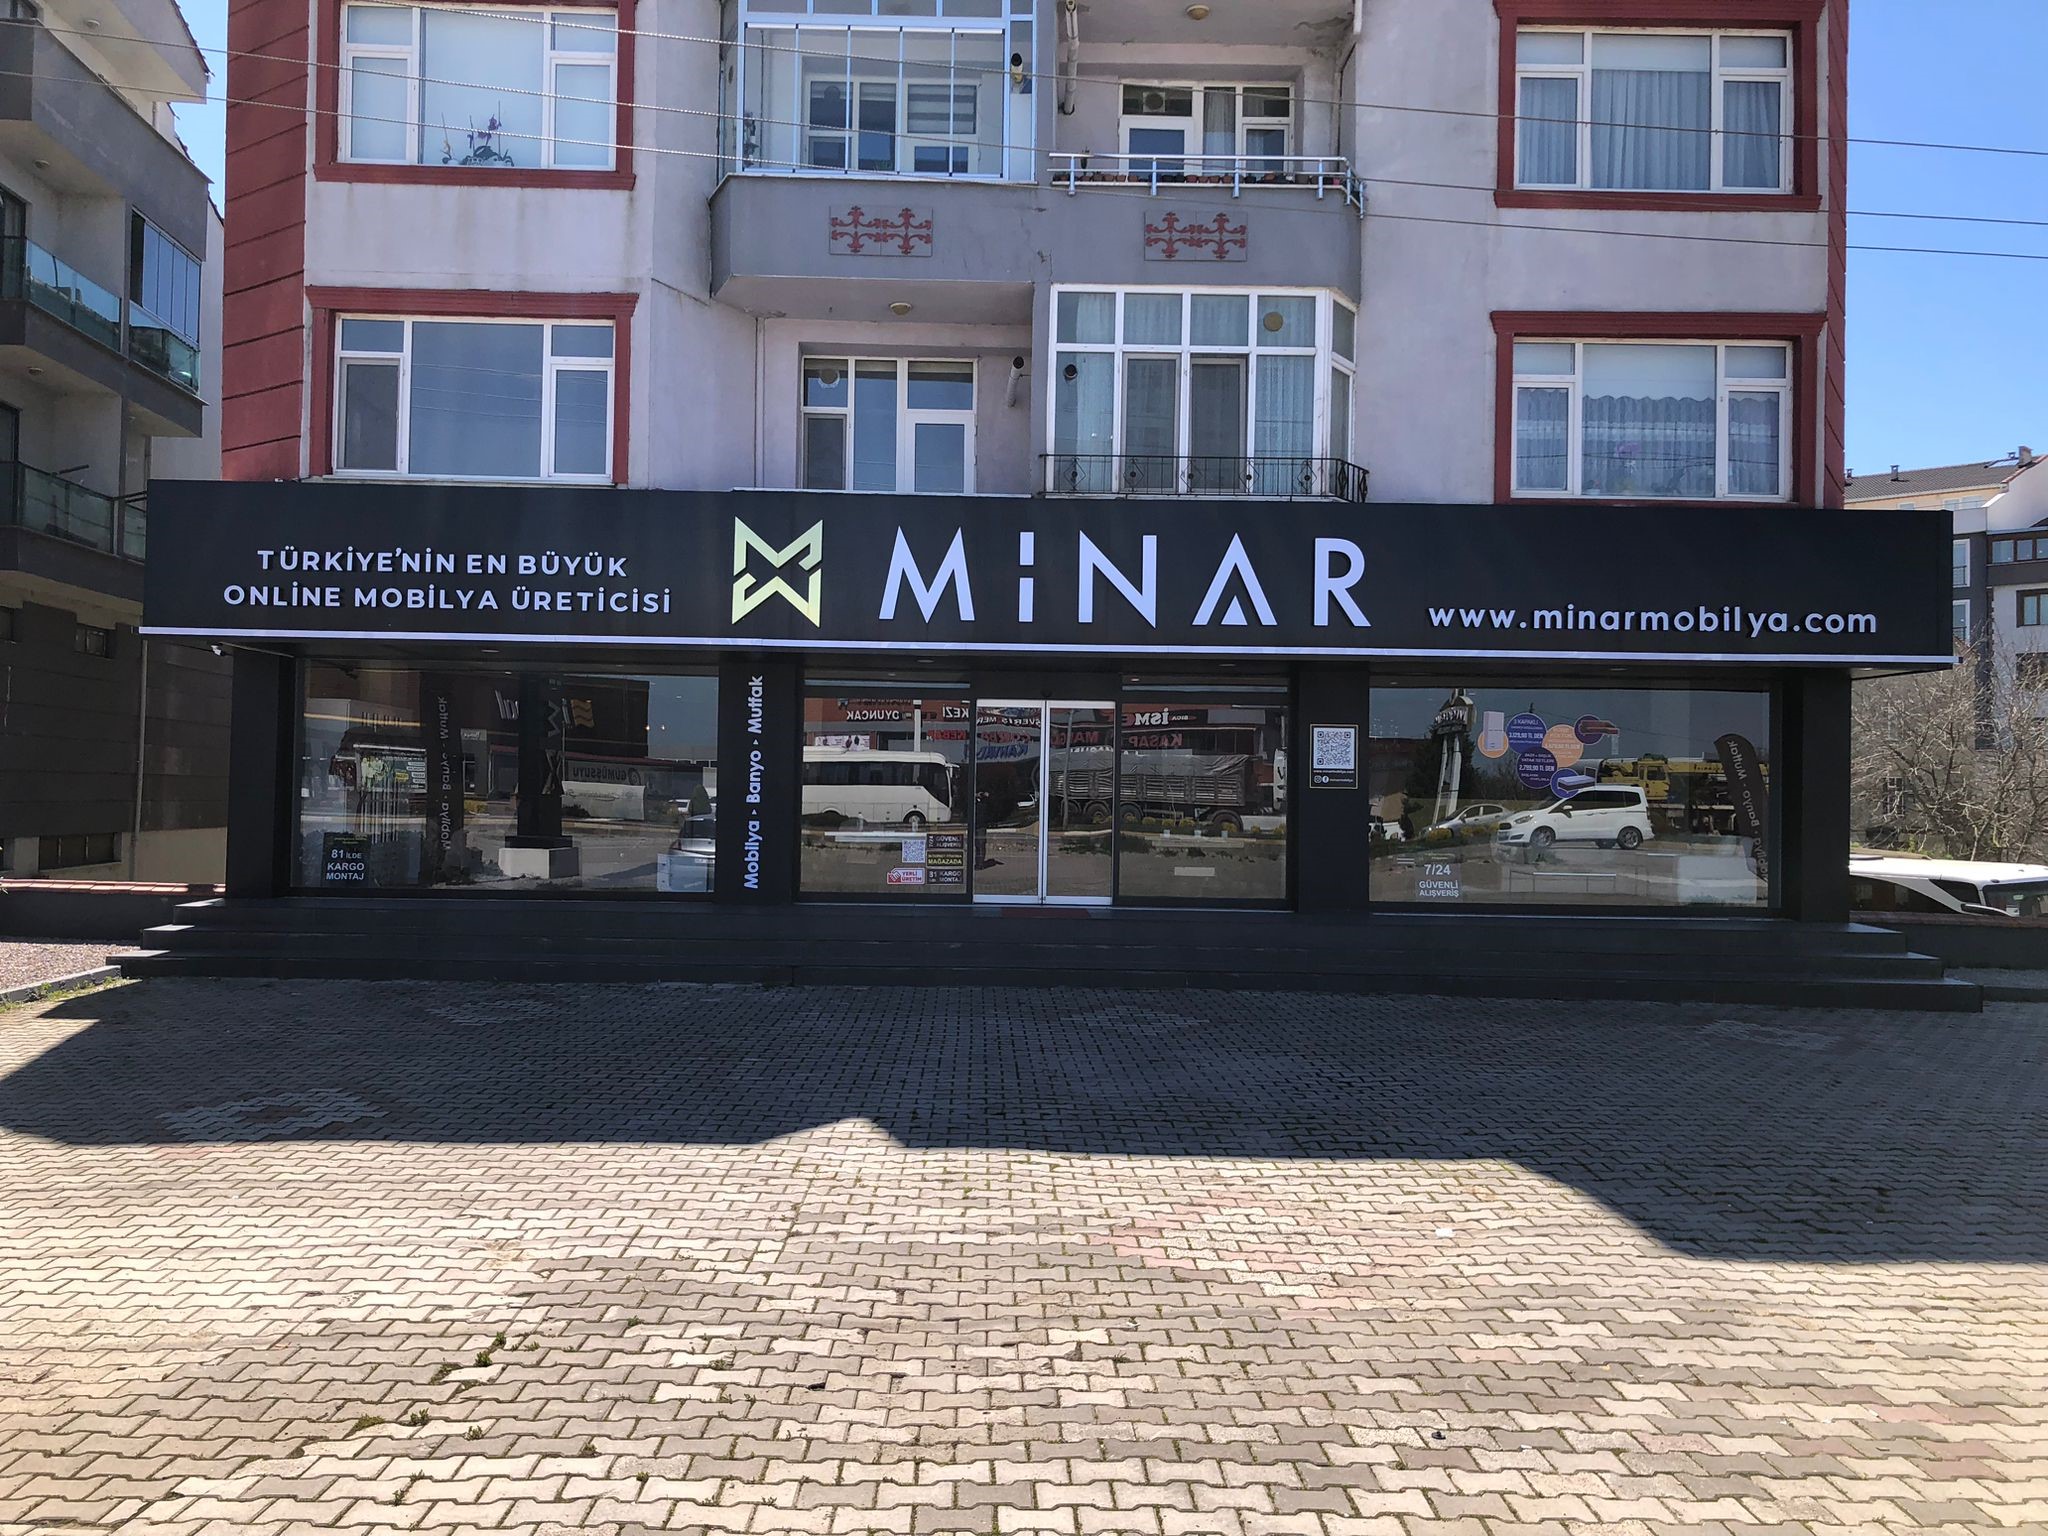 minar2